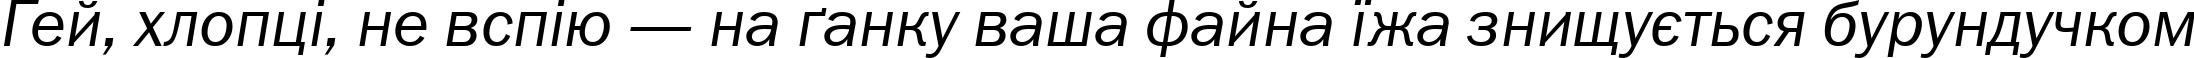 Пример написания шрифтом FranklinGothBookCTT Italic текста на украинском